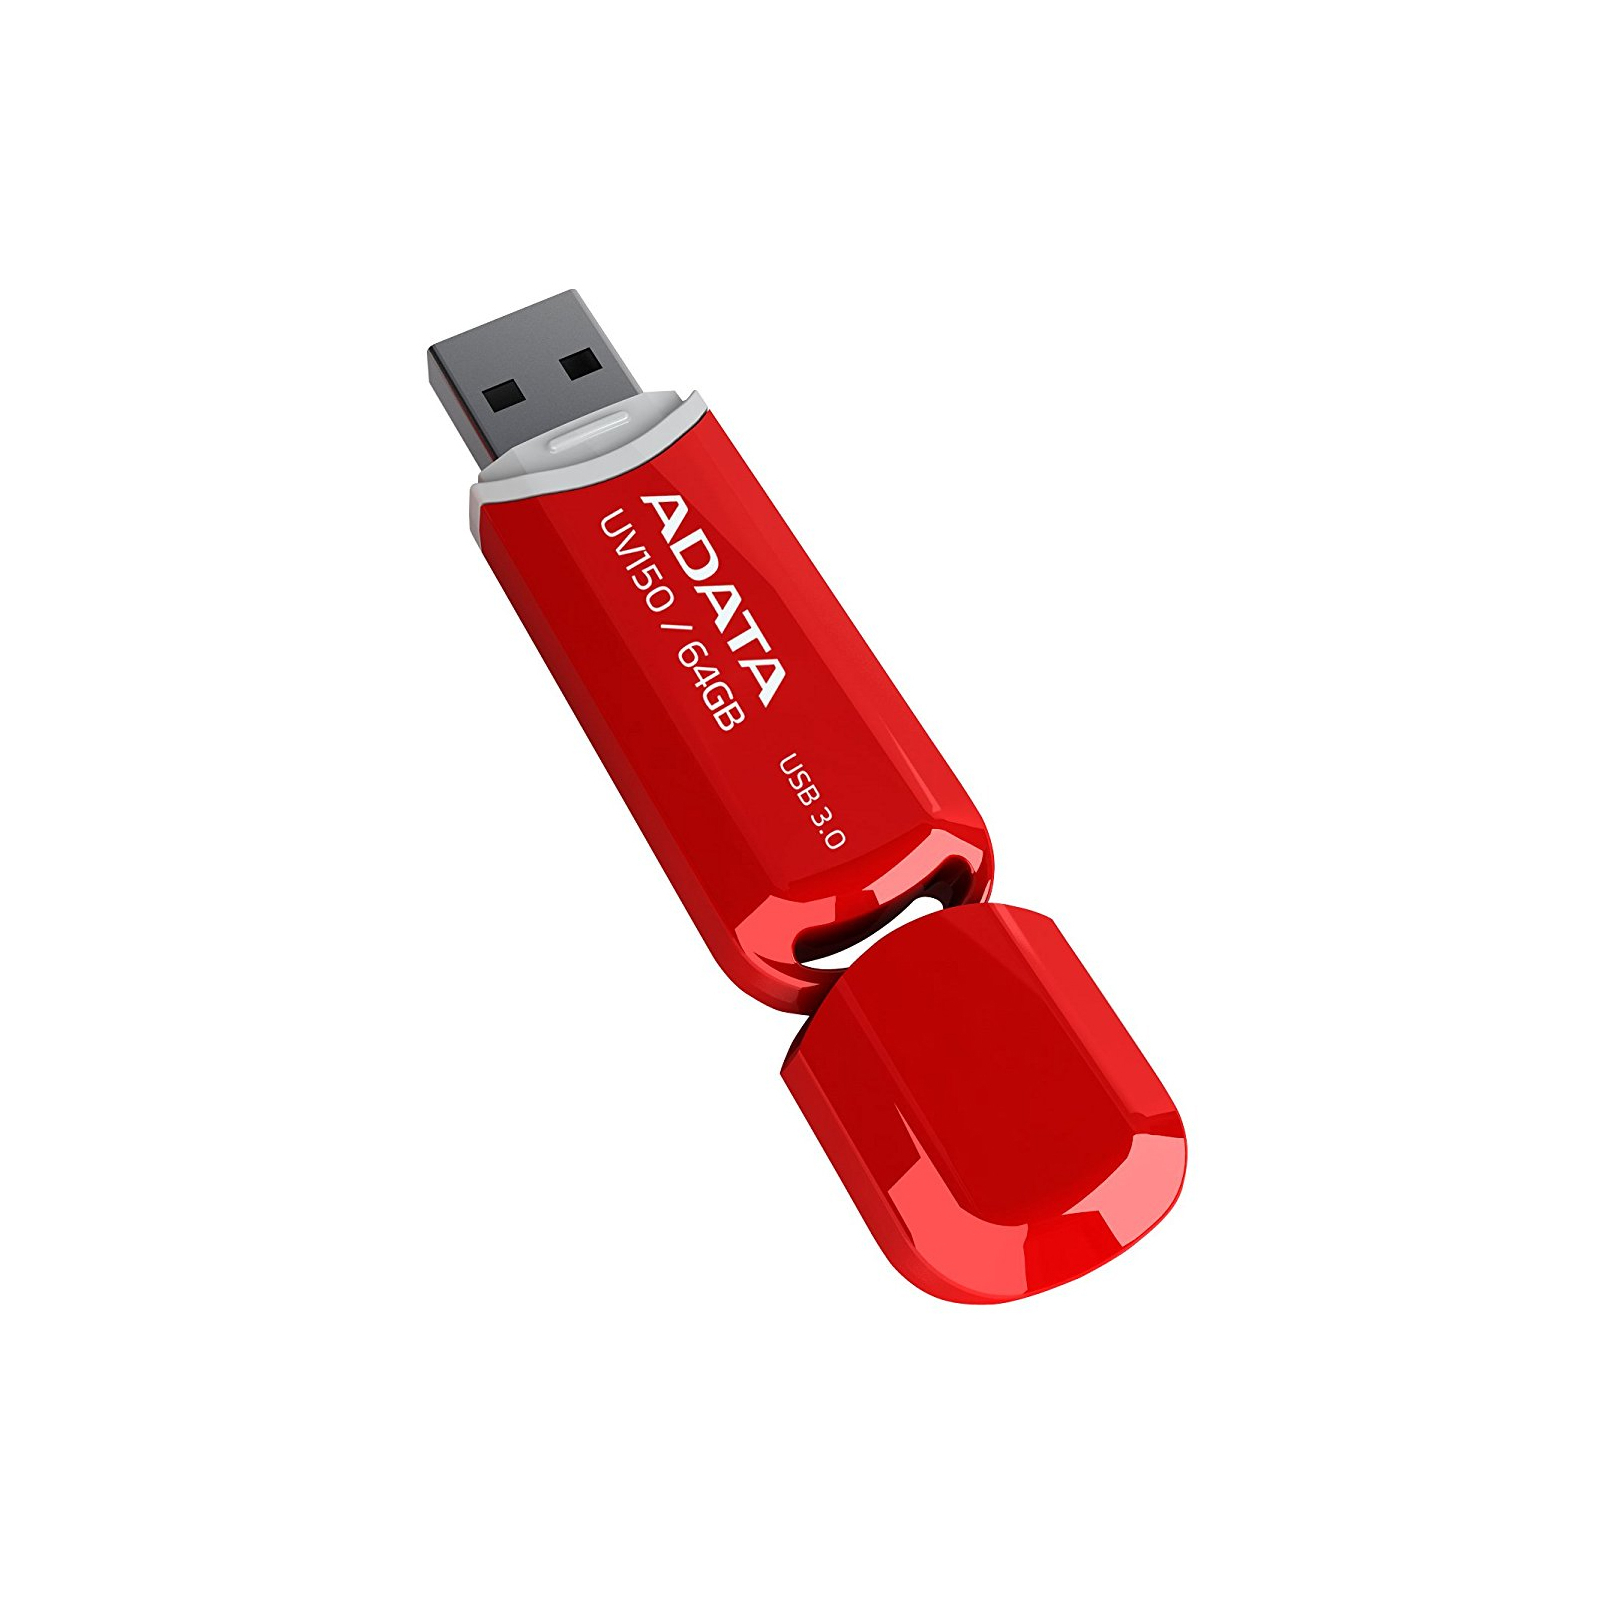 USB флеш накопитель ADATA 128GB UV150 Black USB 3.0 (AUV150-128G-RBK) изображение 3